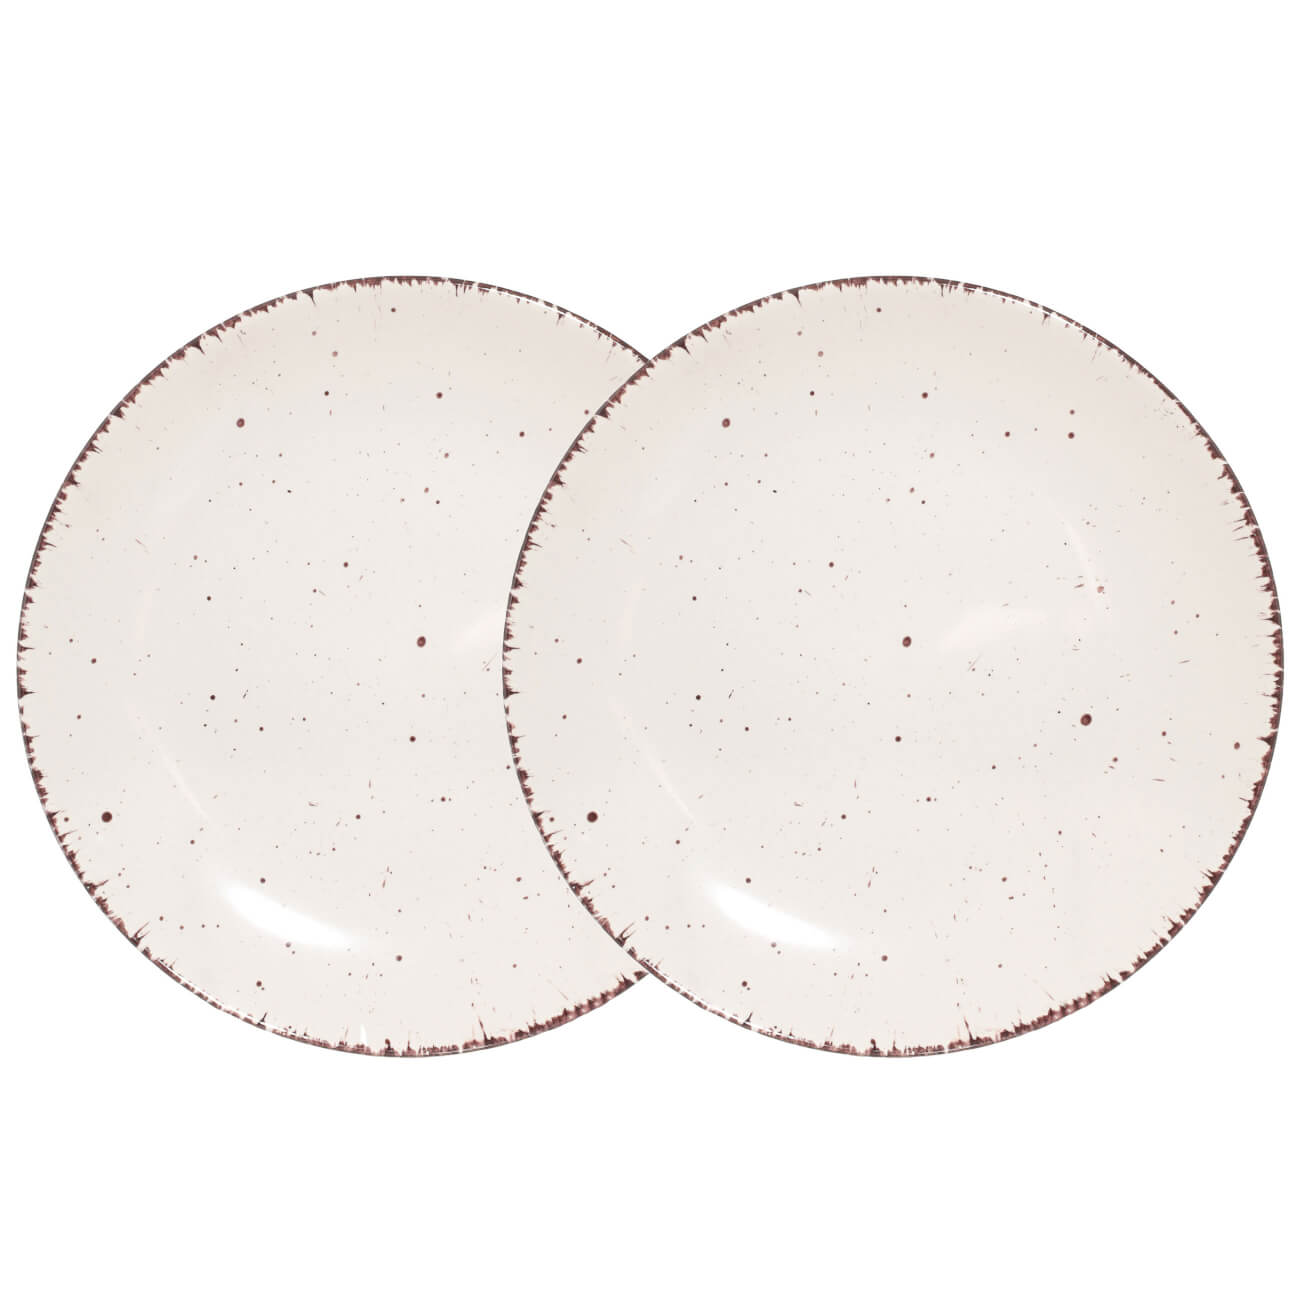 Тарелка закусочная, 21 см, 2 шт, керамика, бежевая, в крапинку, Speckled подставка под кружку 11 см керамика пробка круглая бежевая minimalist